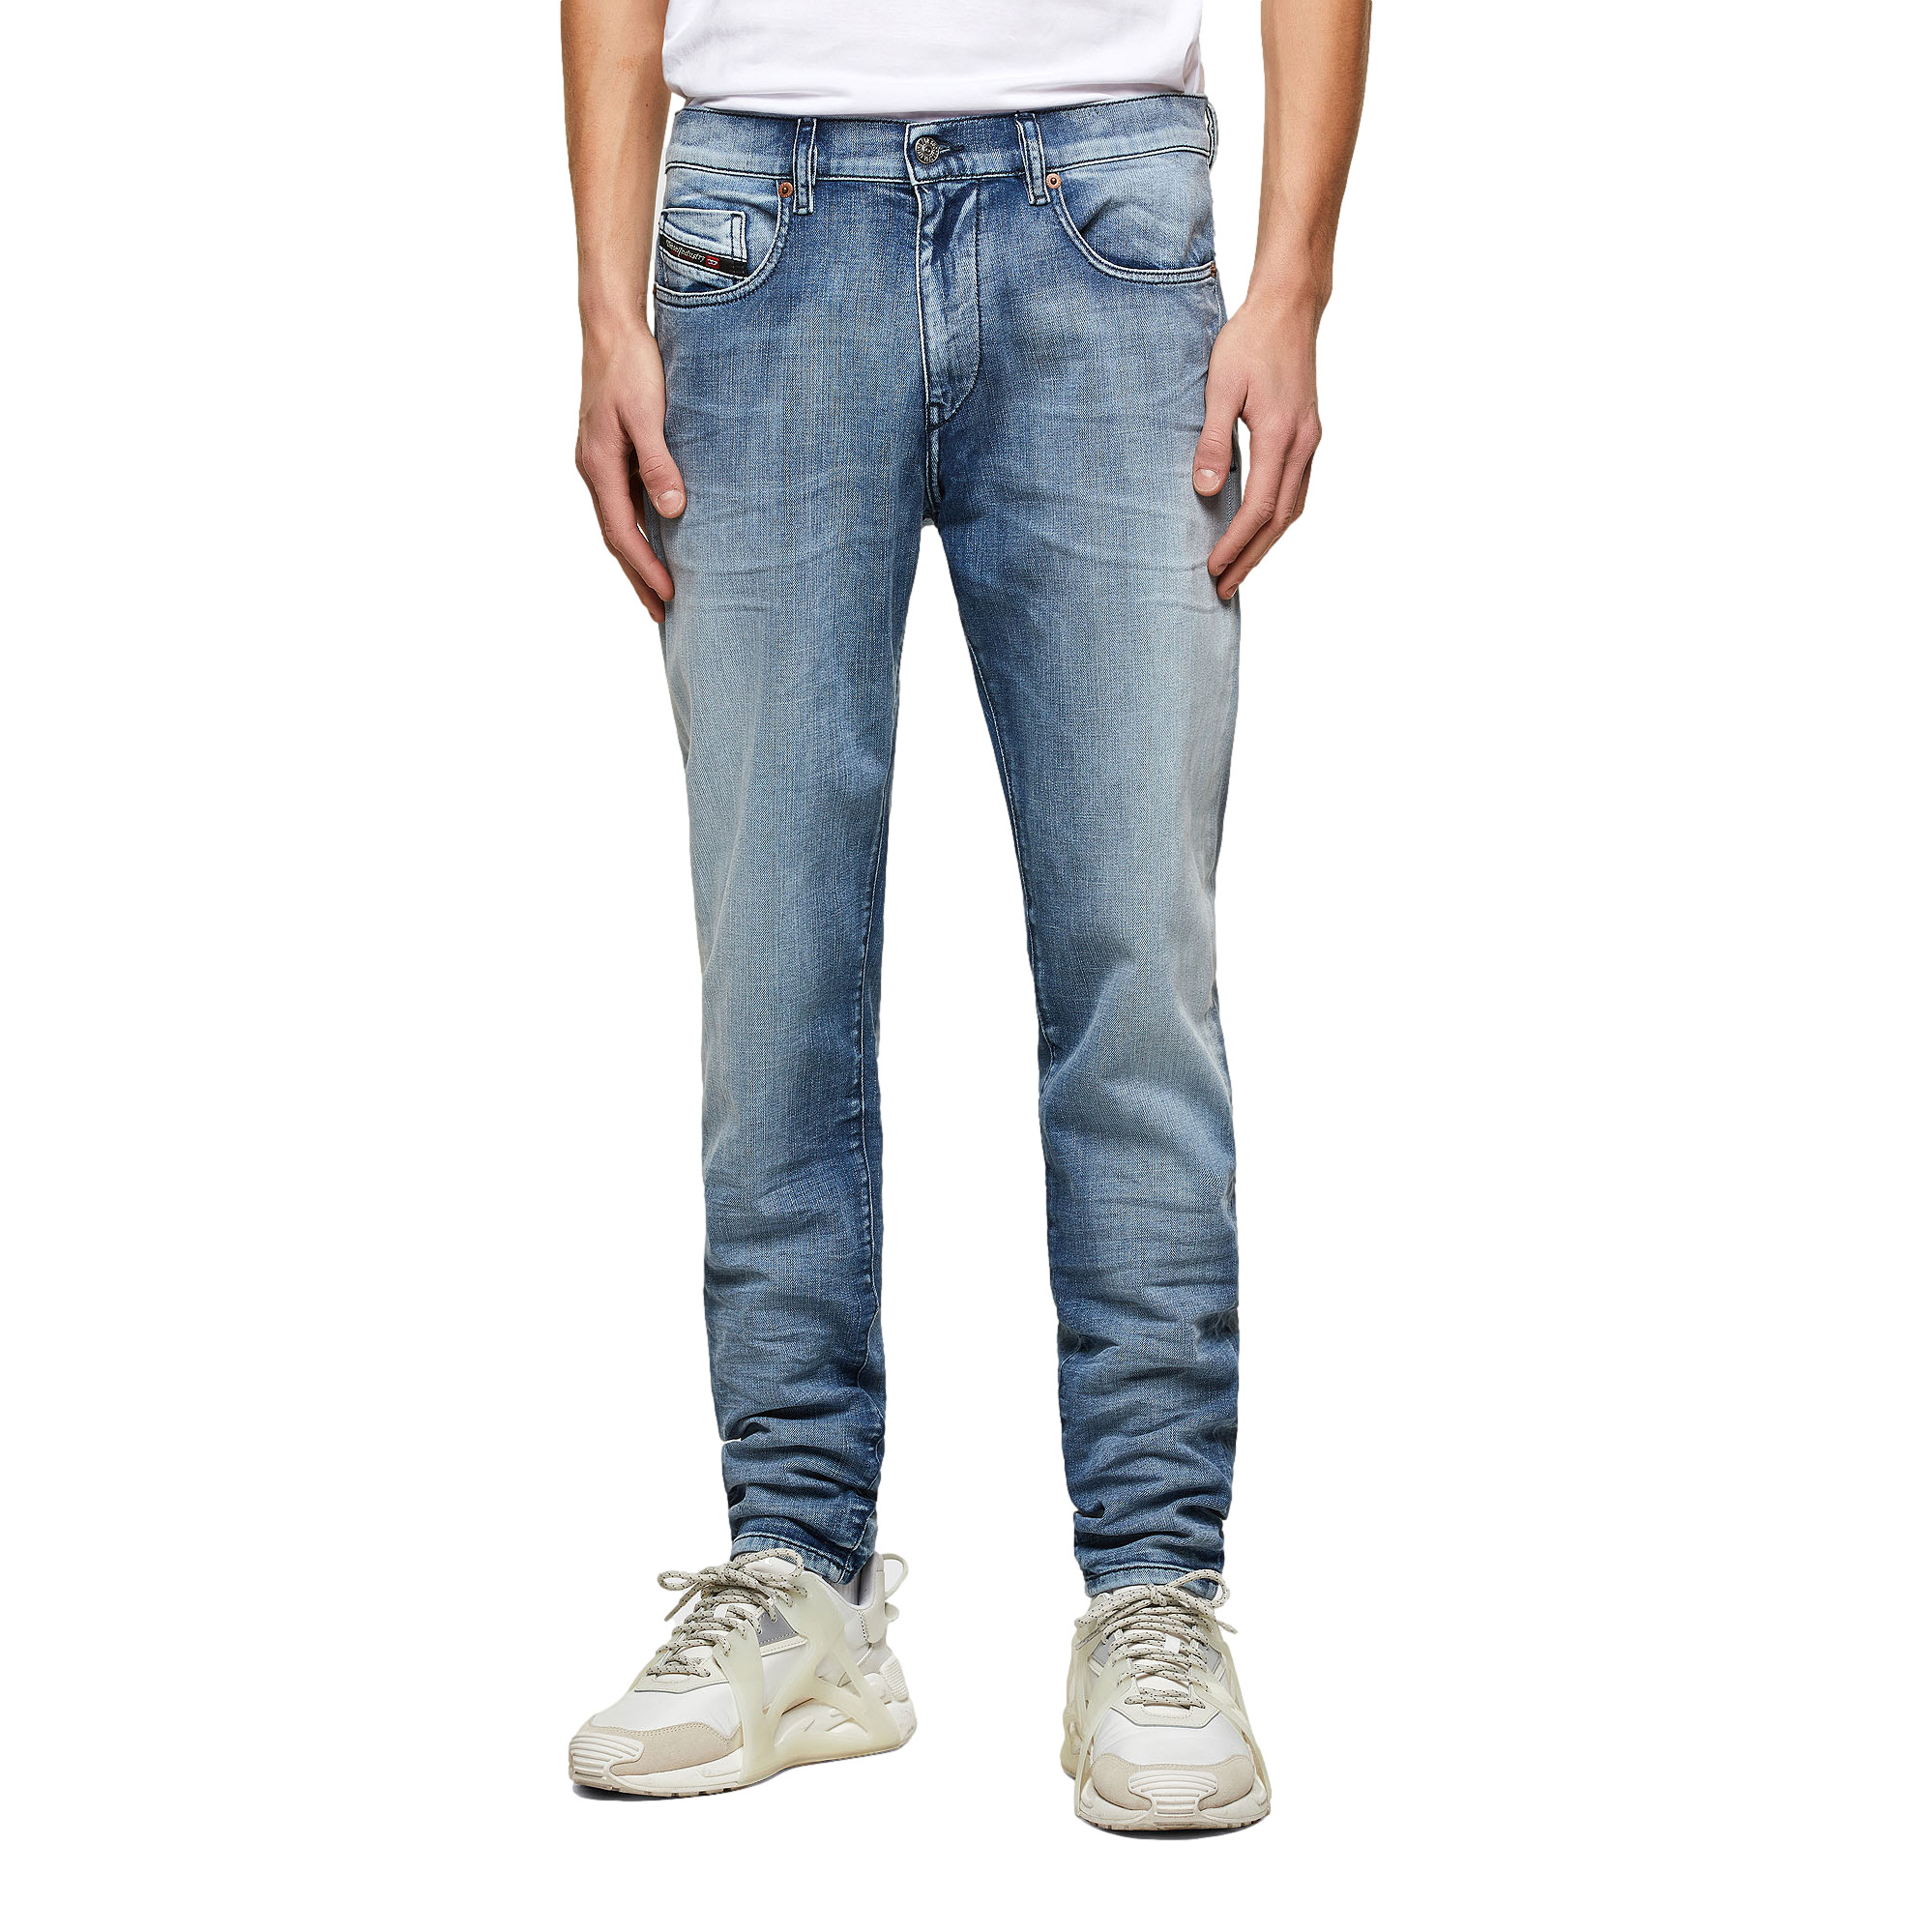 Manifesteren sterk factor Diesel Jeans Slimfit - To Be Dressed | StyleSearch